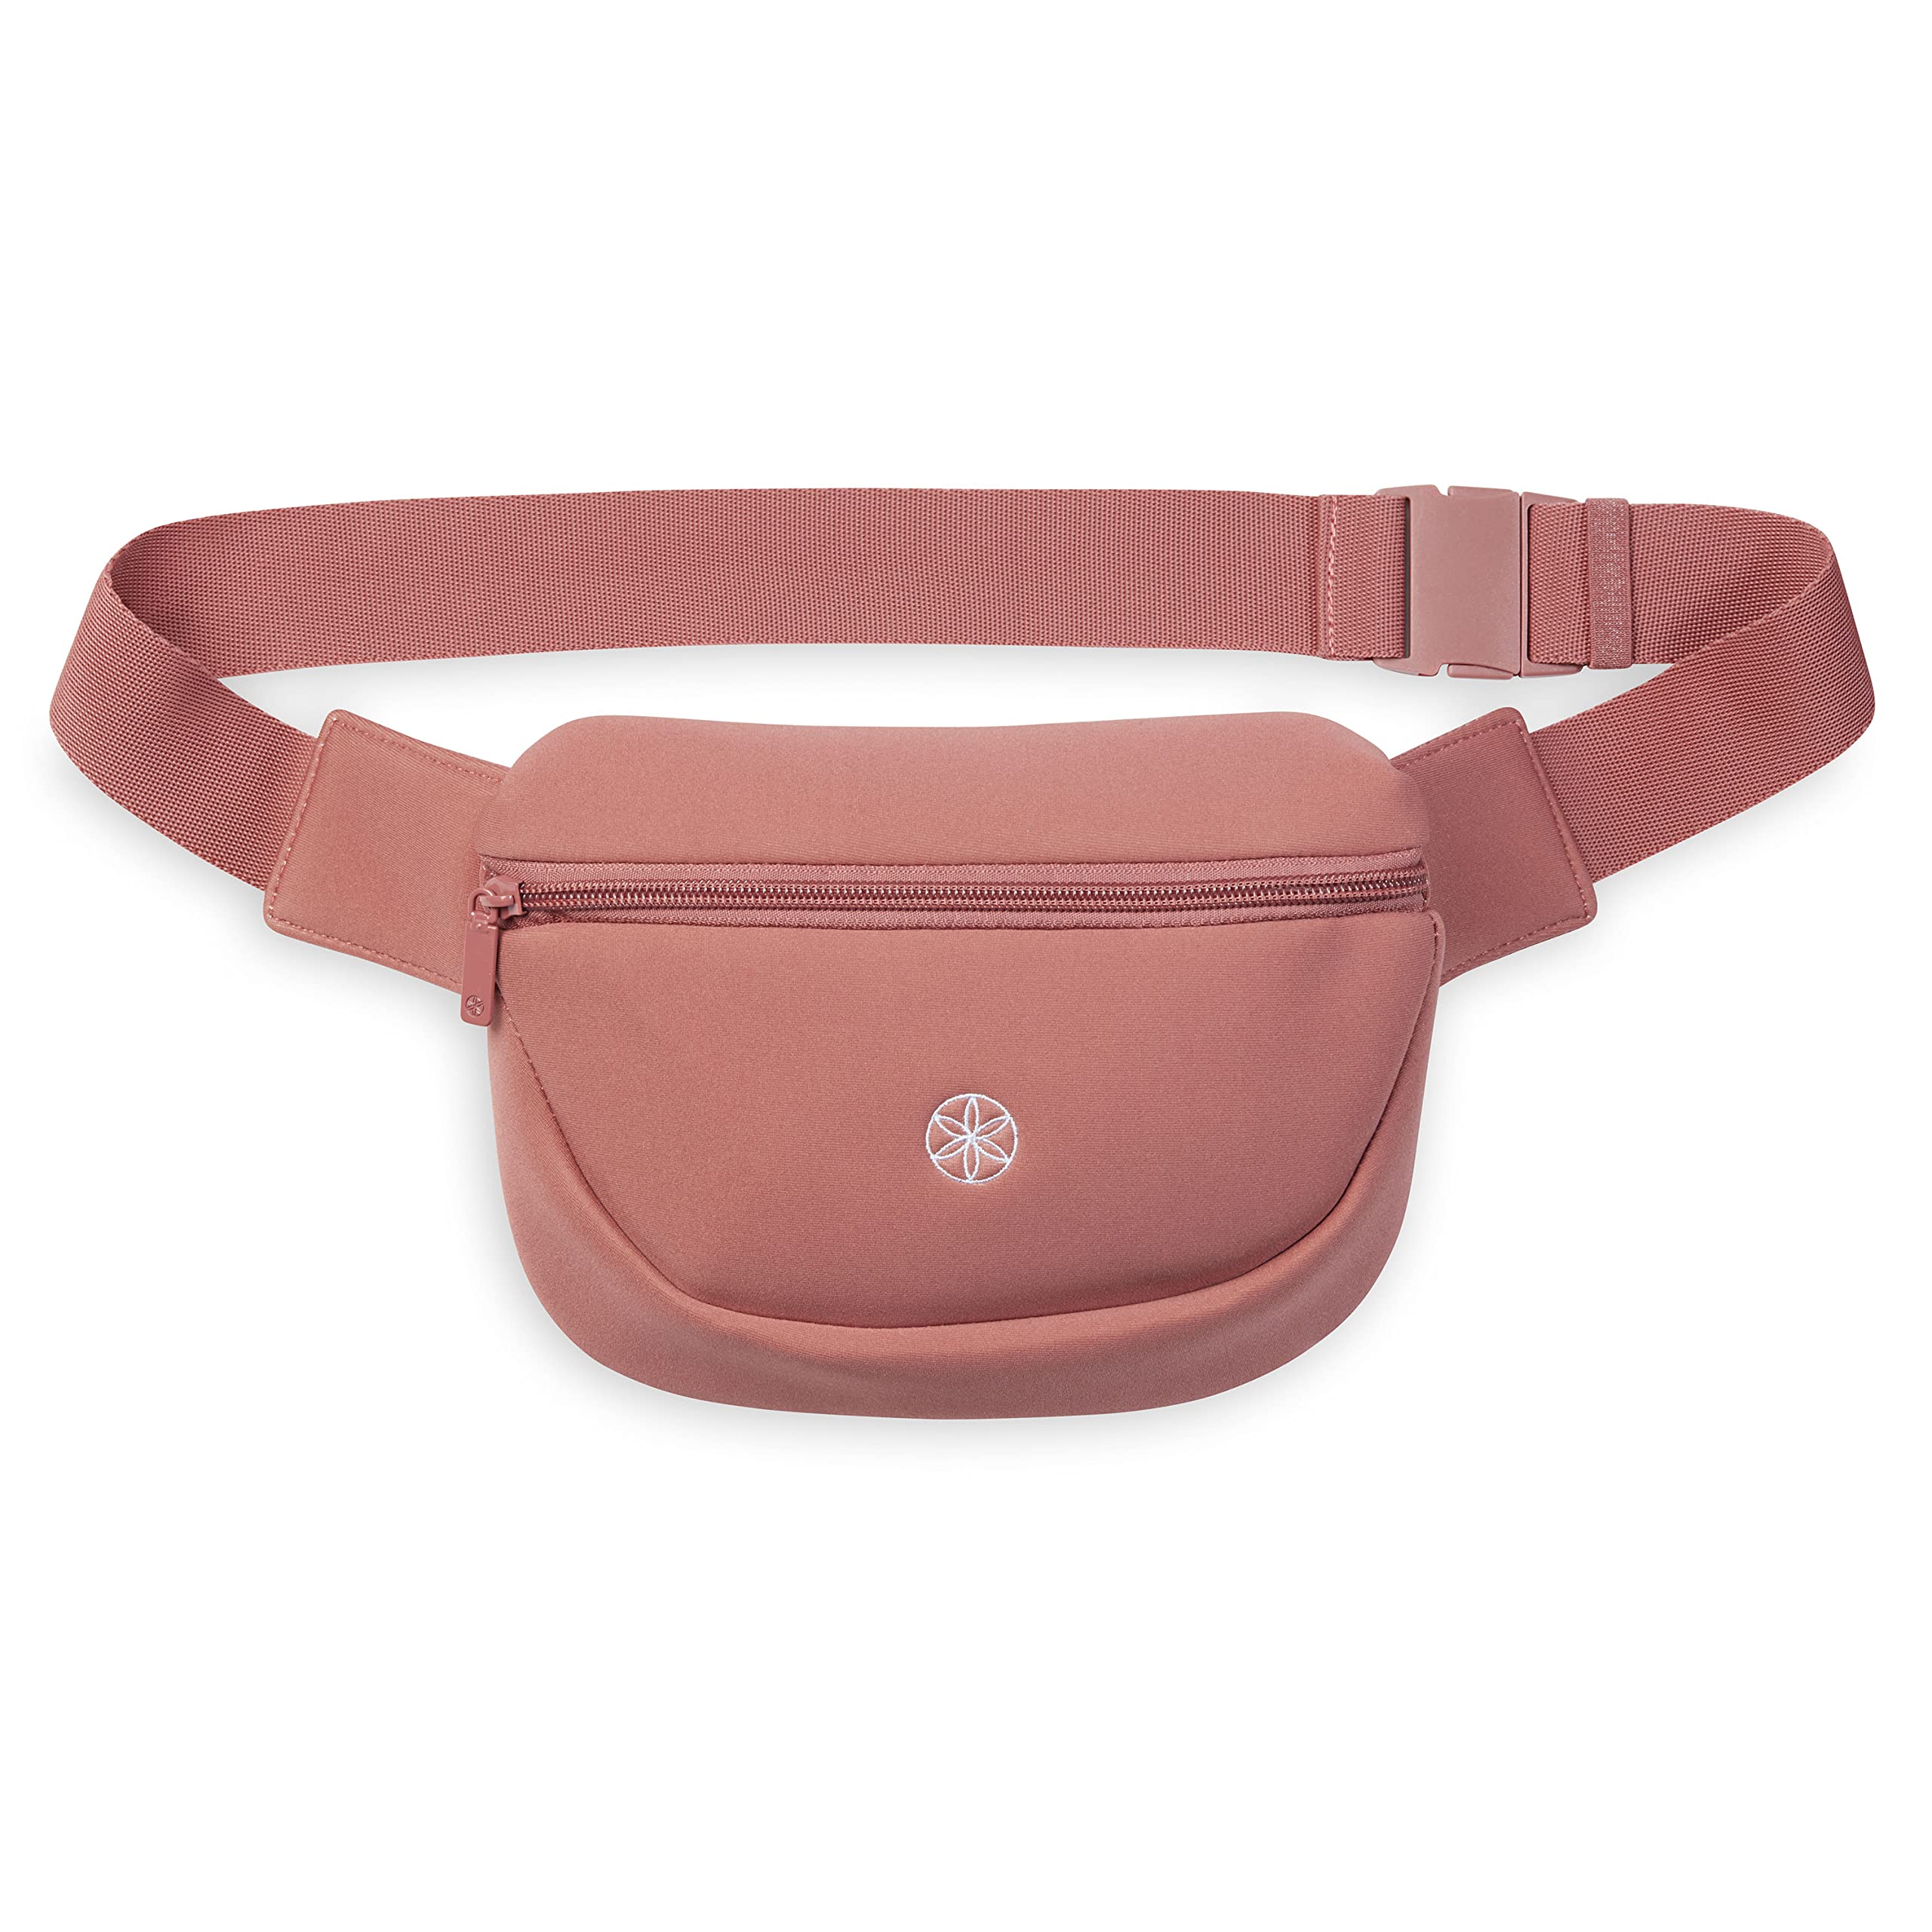 Gaiam Altitude Waist Pack - Storage Belt Bag for Women And Men - Adjustable Belt With Lightweight Pouch For Storing Essentials